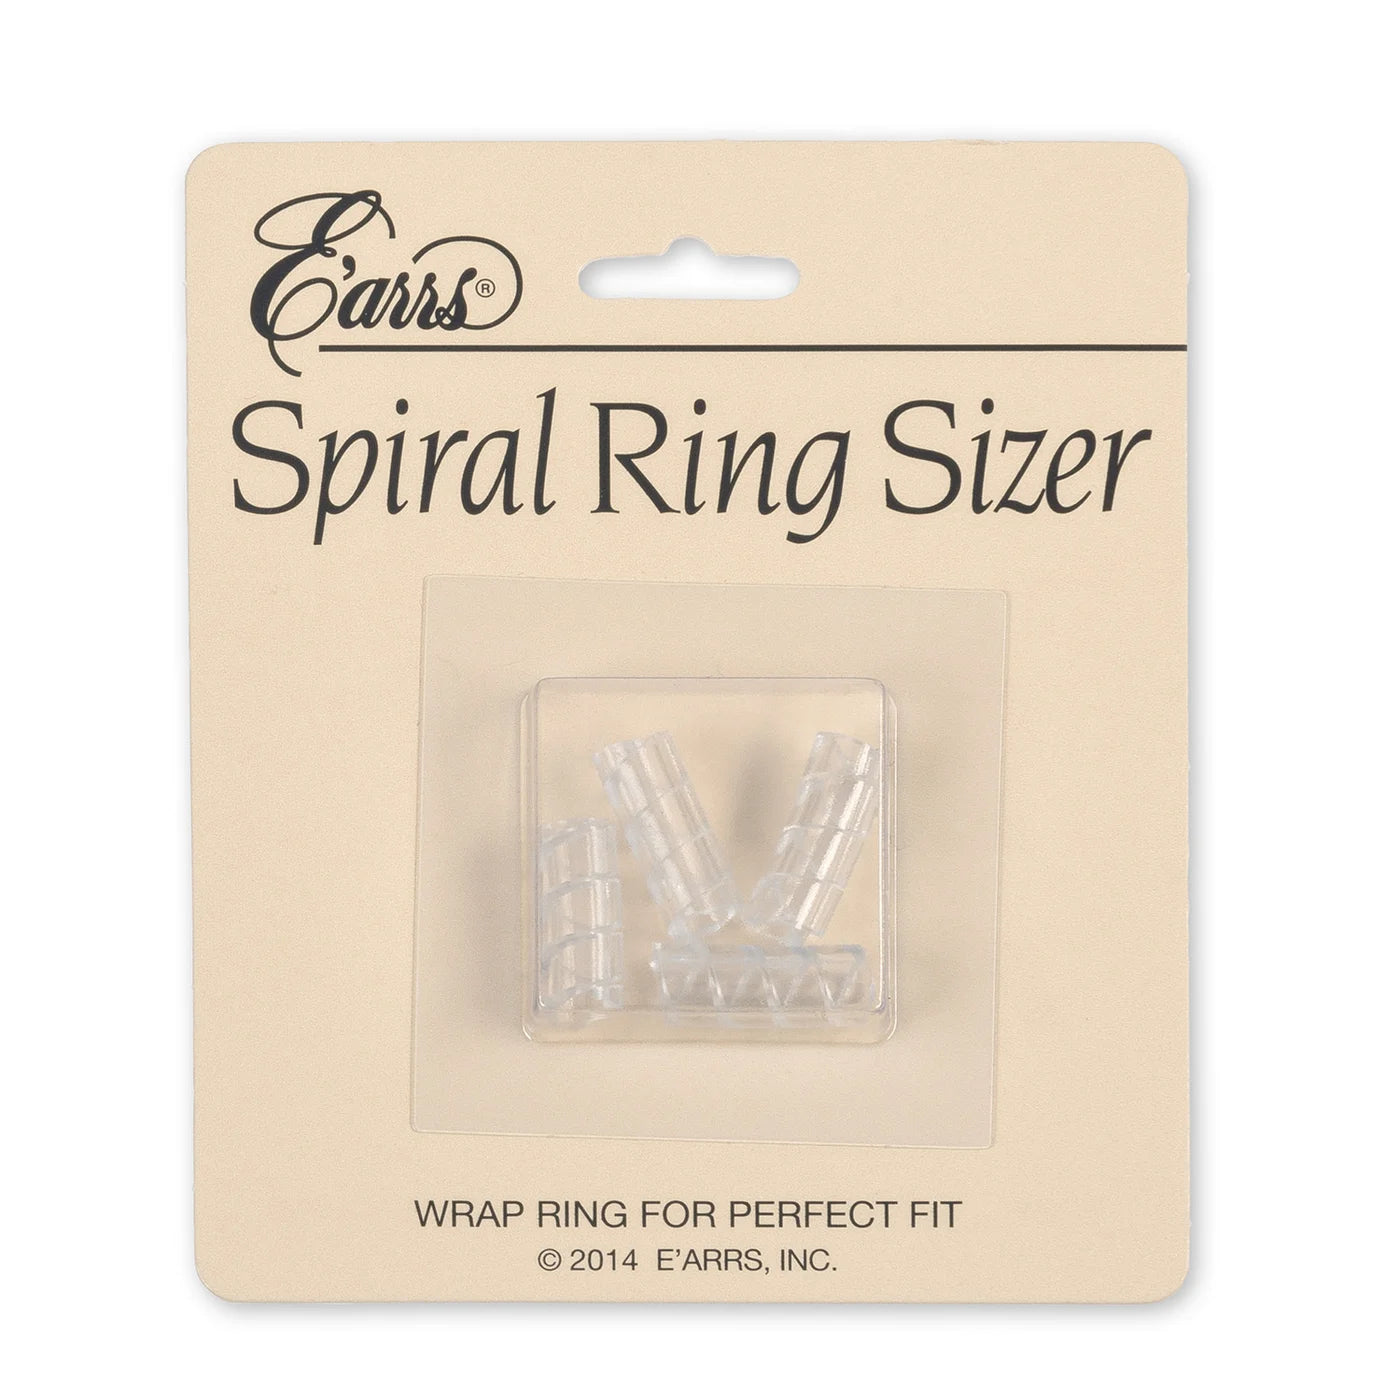 Howard's Spiral Ring Sizer